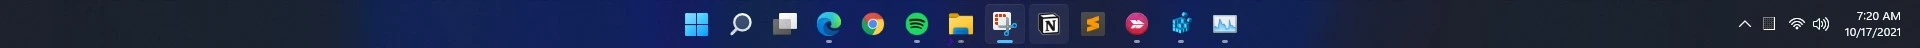 taskbar smaller in Windows 11